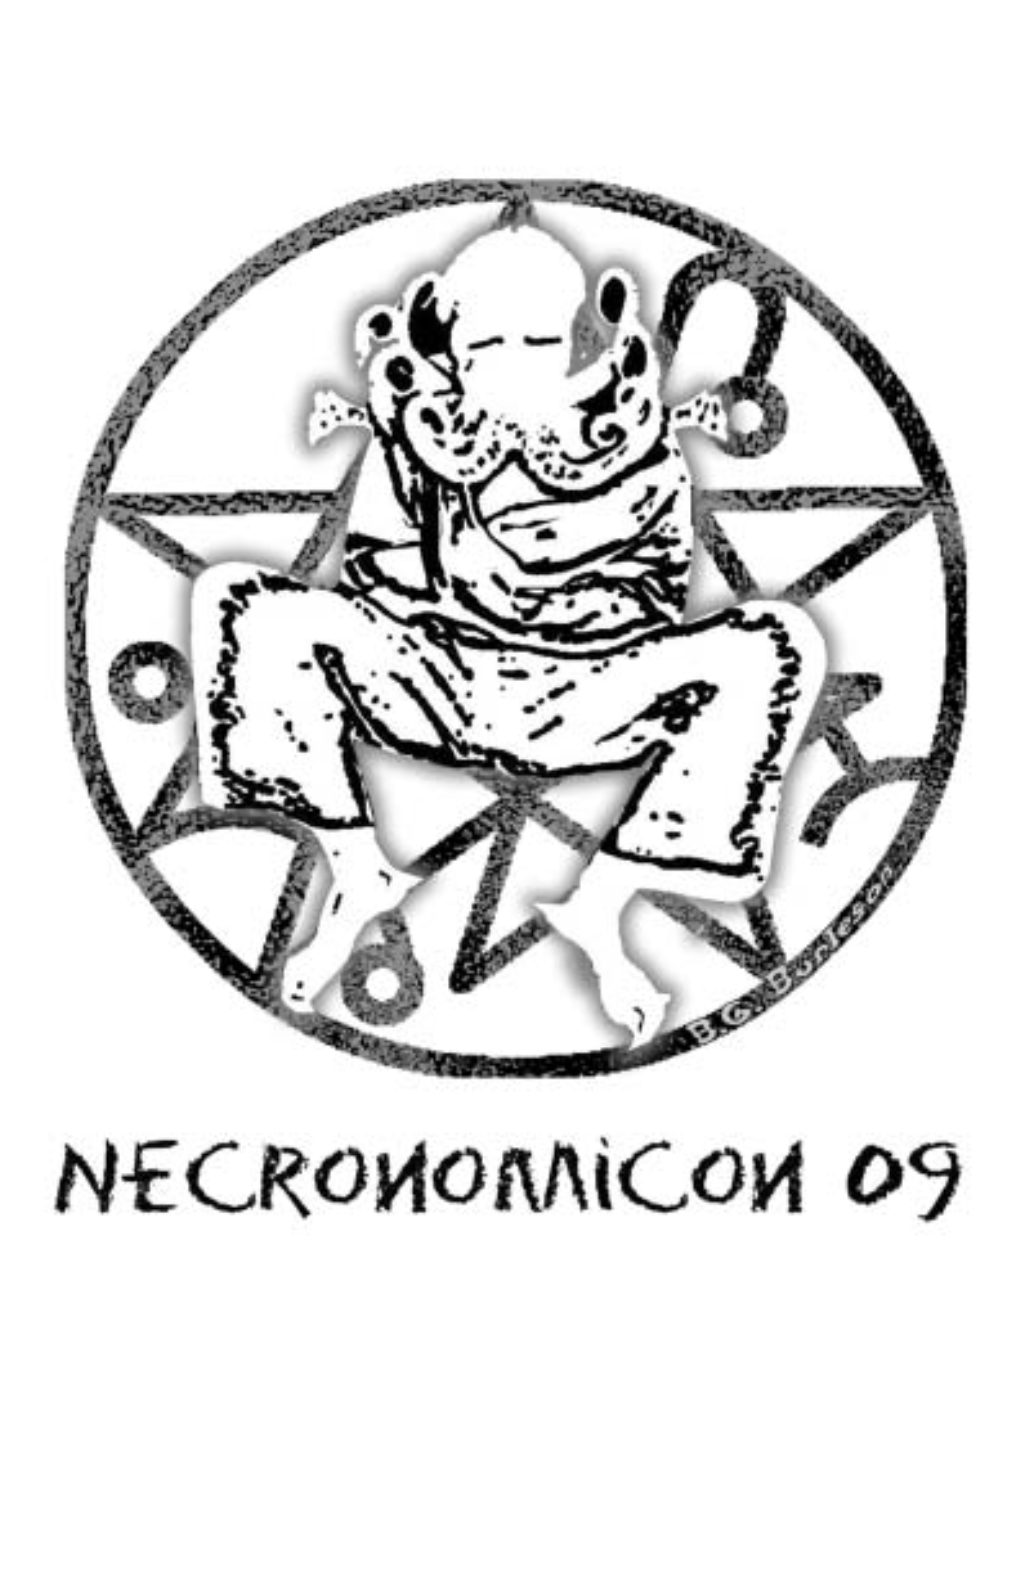 Necronomicon 2009 Program Book